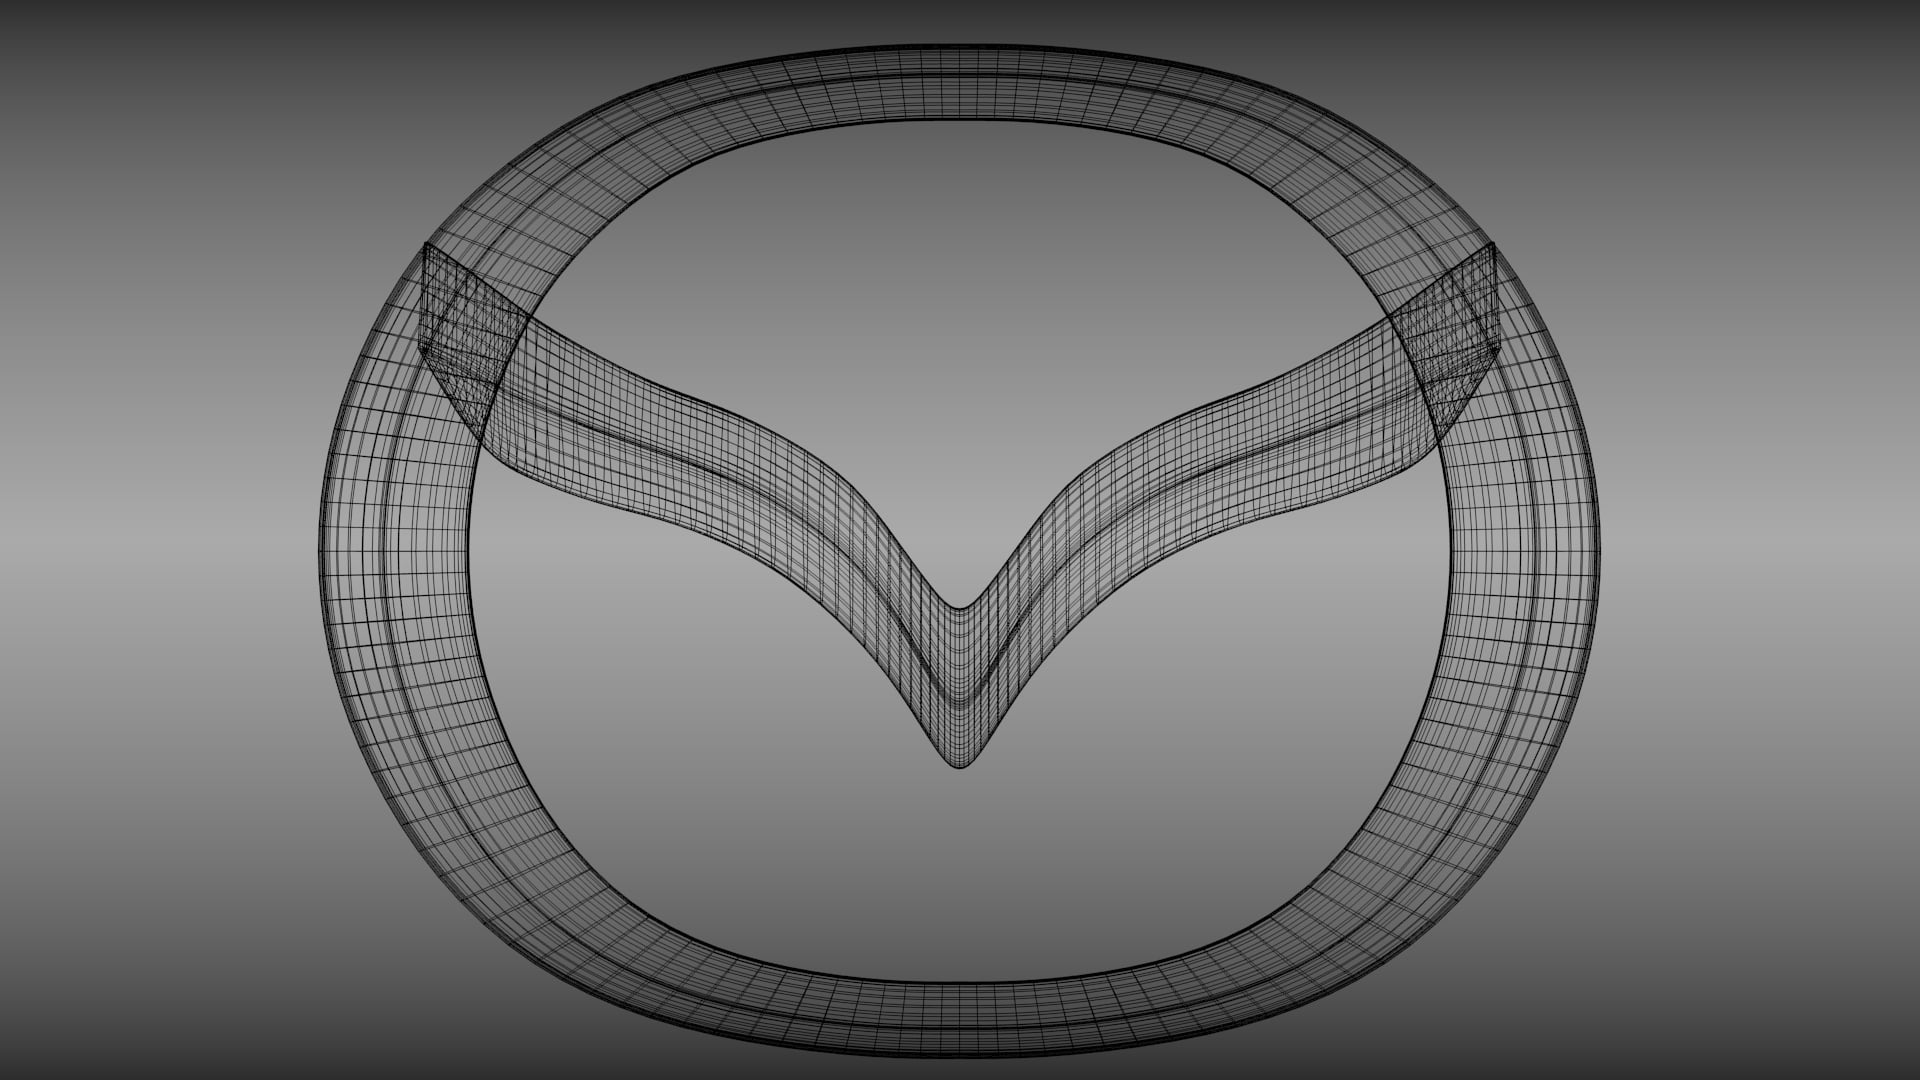 Mazda logo, monochrome, digital art, simple, minimalism